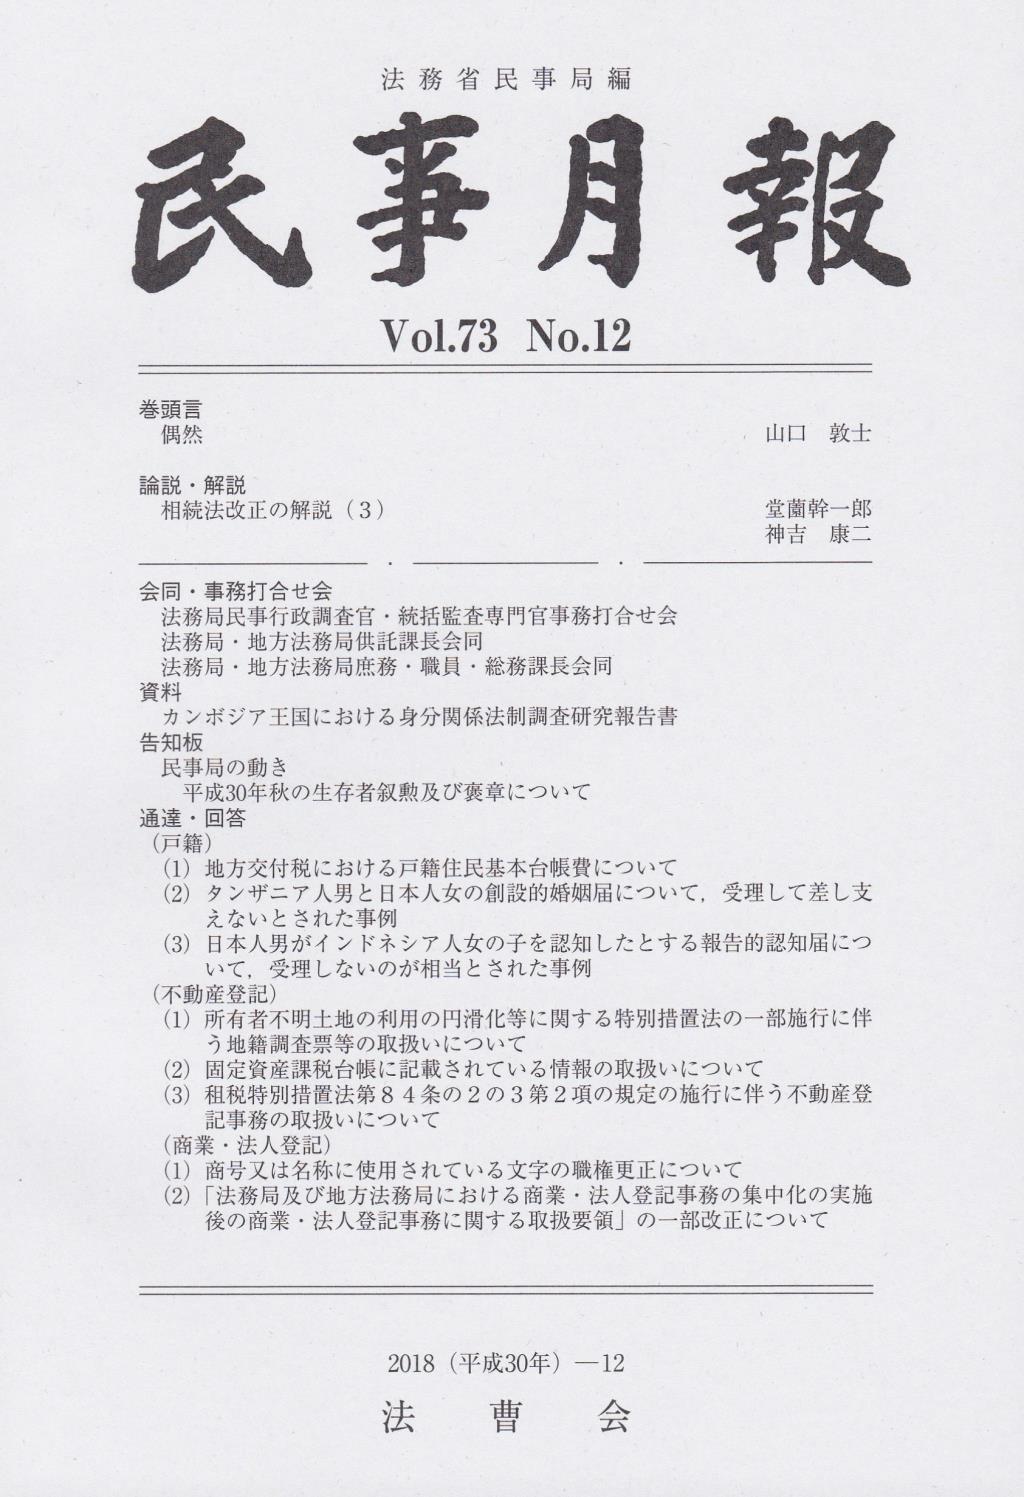 民事月報 Vol.73 No.12（2018-12）